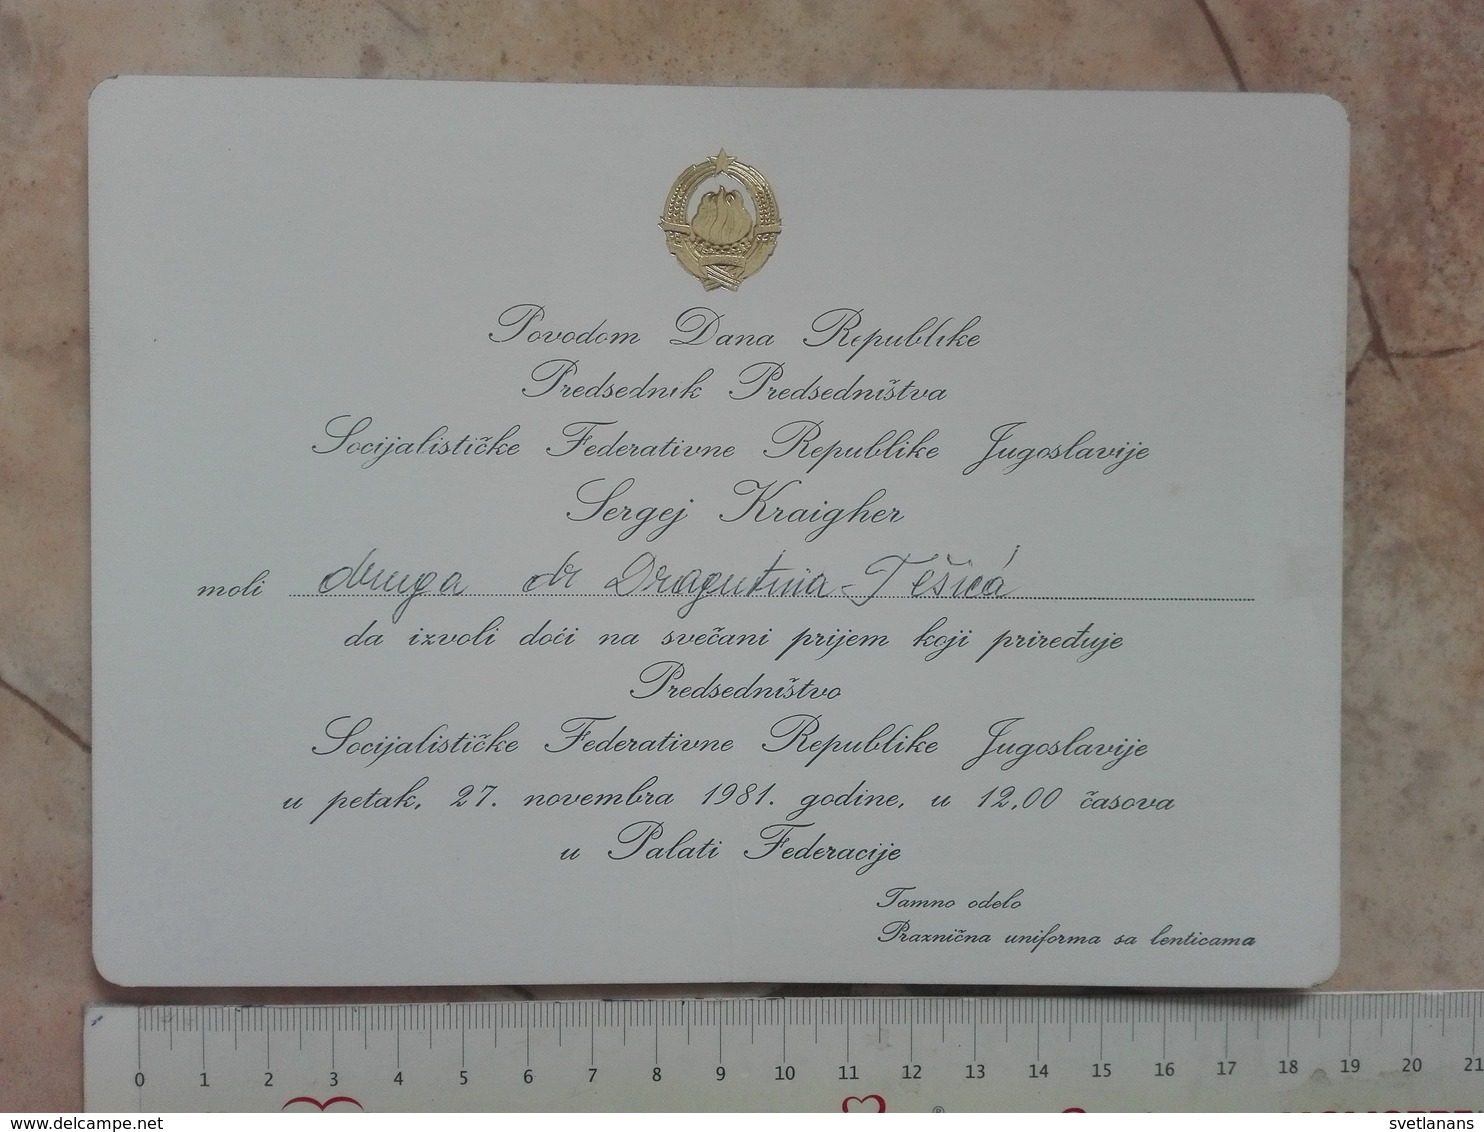 1981 PRESIDENT YUGOSLAVIA JOSIP BROZ TITO INVITATION CARD Sergej Kraigher President Presidency Republic Day Celebration - Documents Historiques